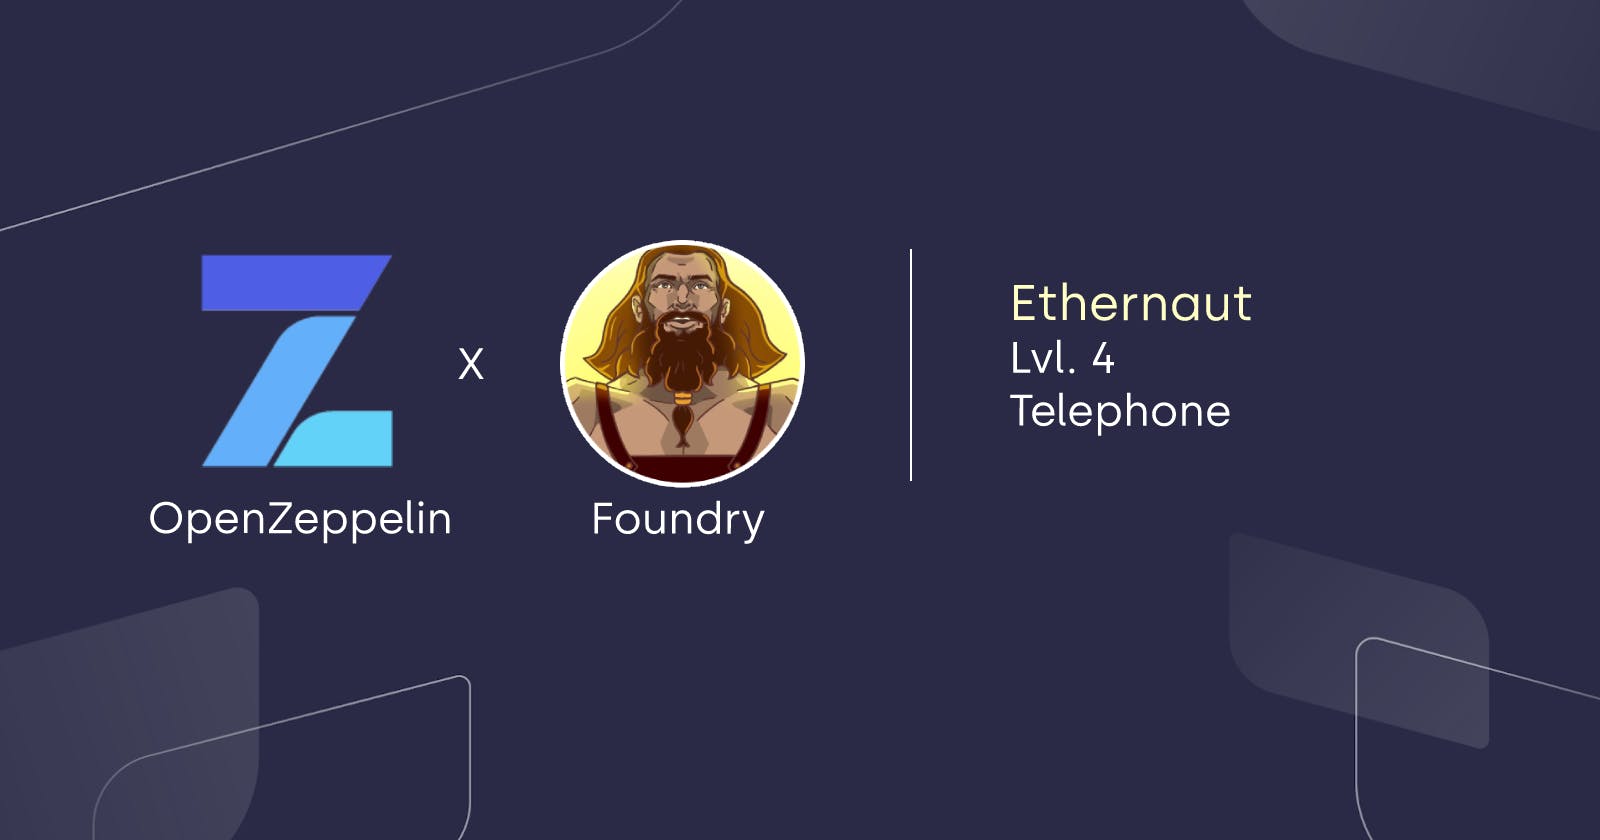 Ethereum x Foundry - 0x4 Telephone